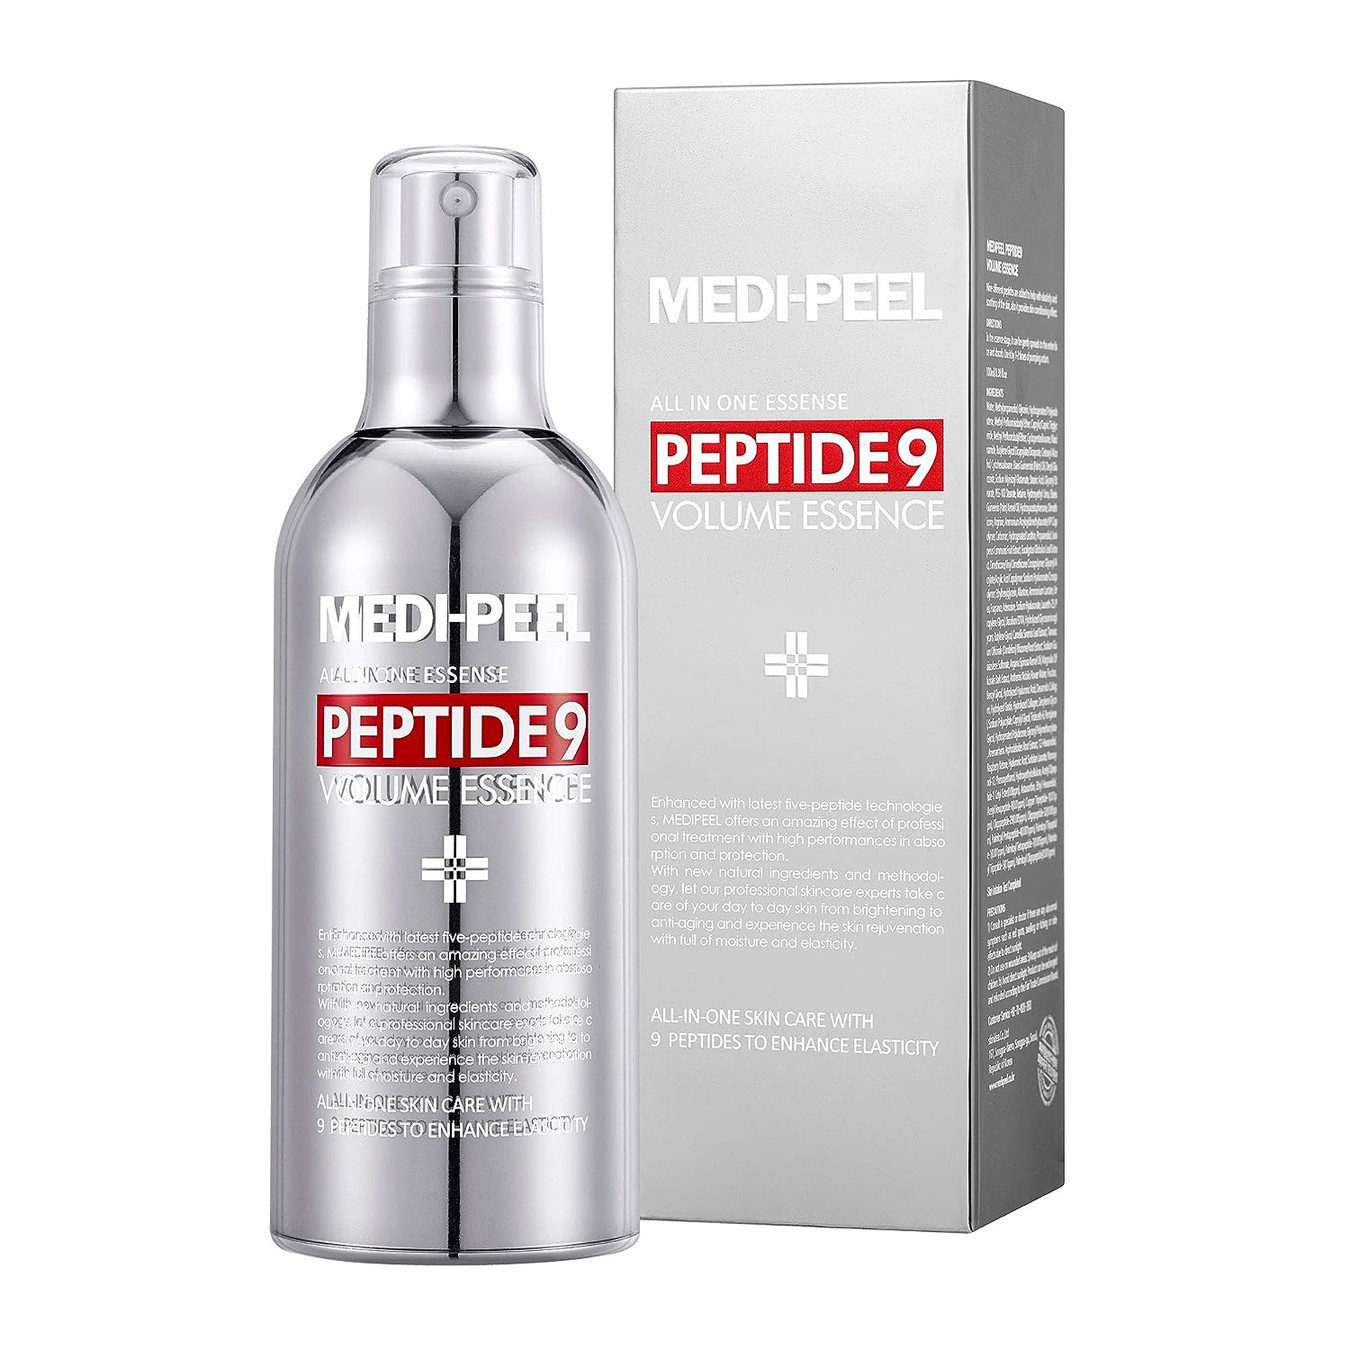 MEDI-PEEL Peptide 9 Volume All in one Essence (3.38 oz)